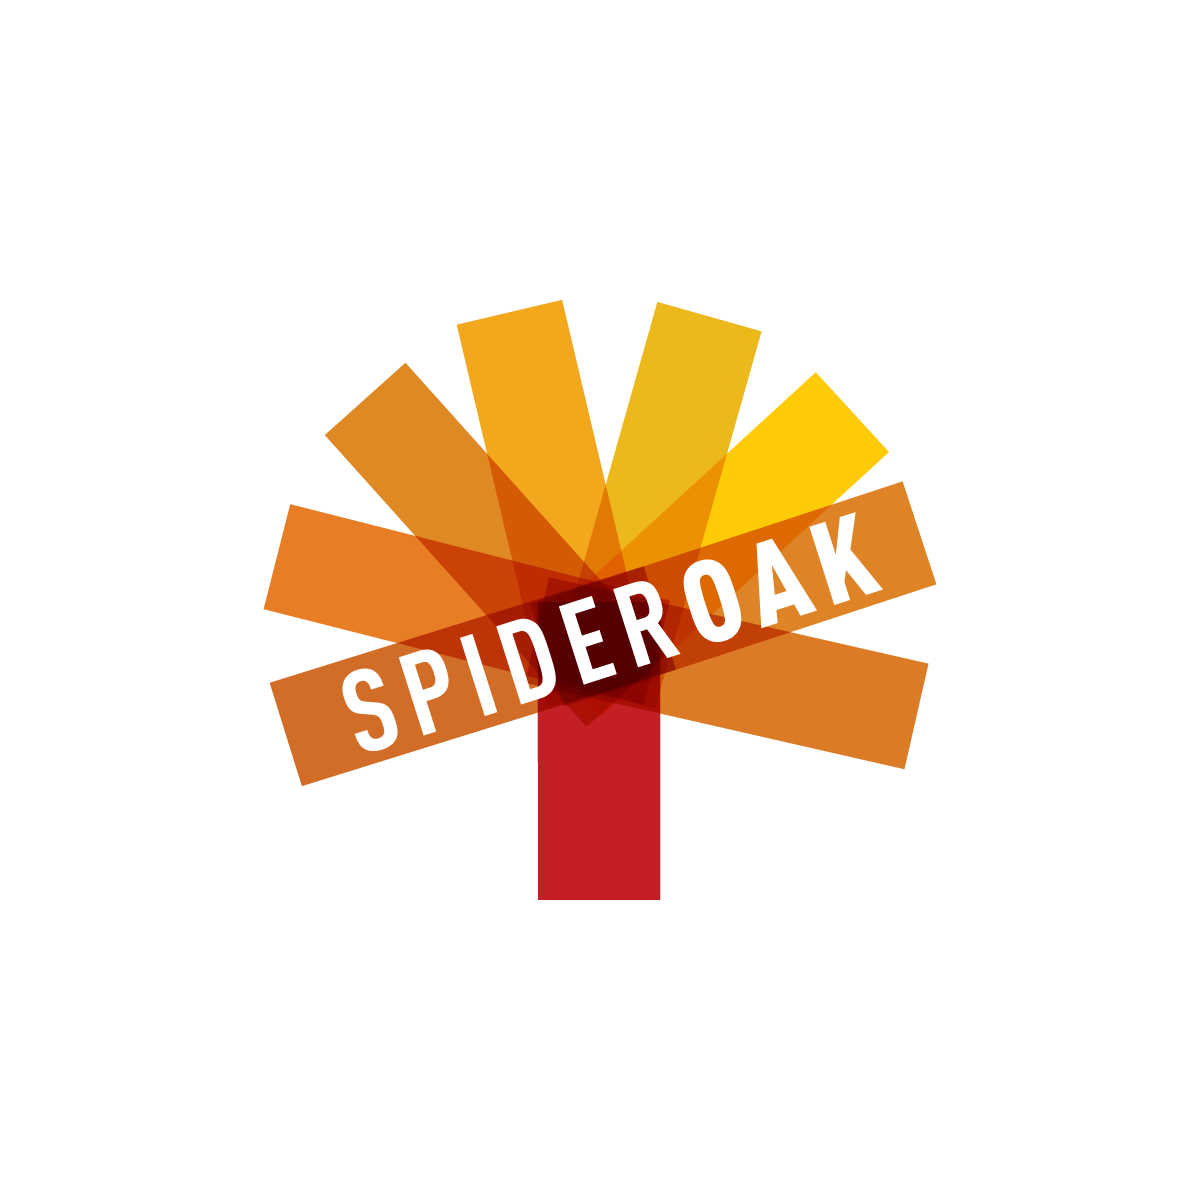 spideroak file sharing